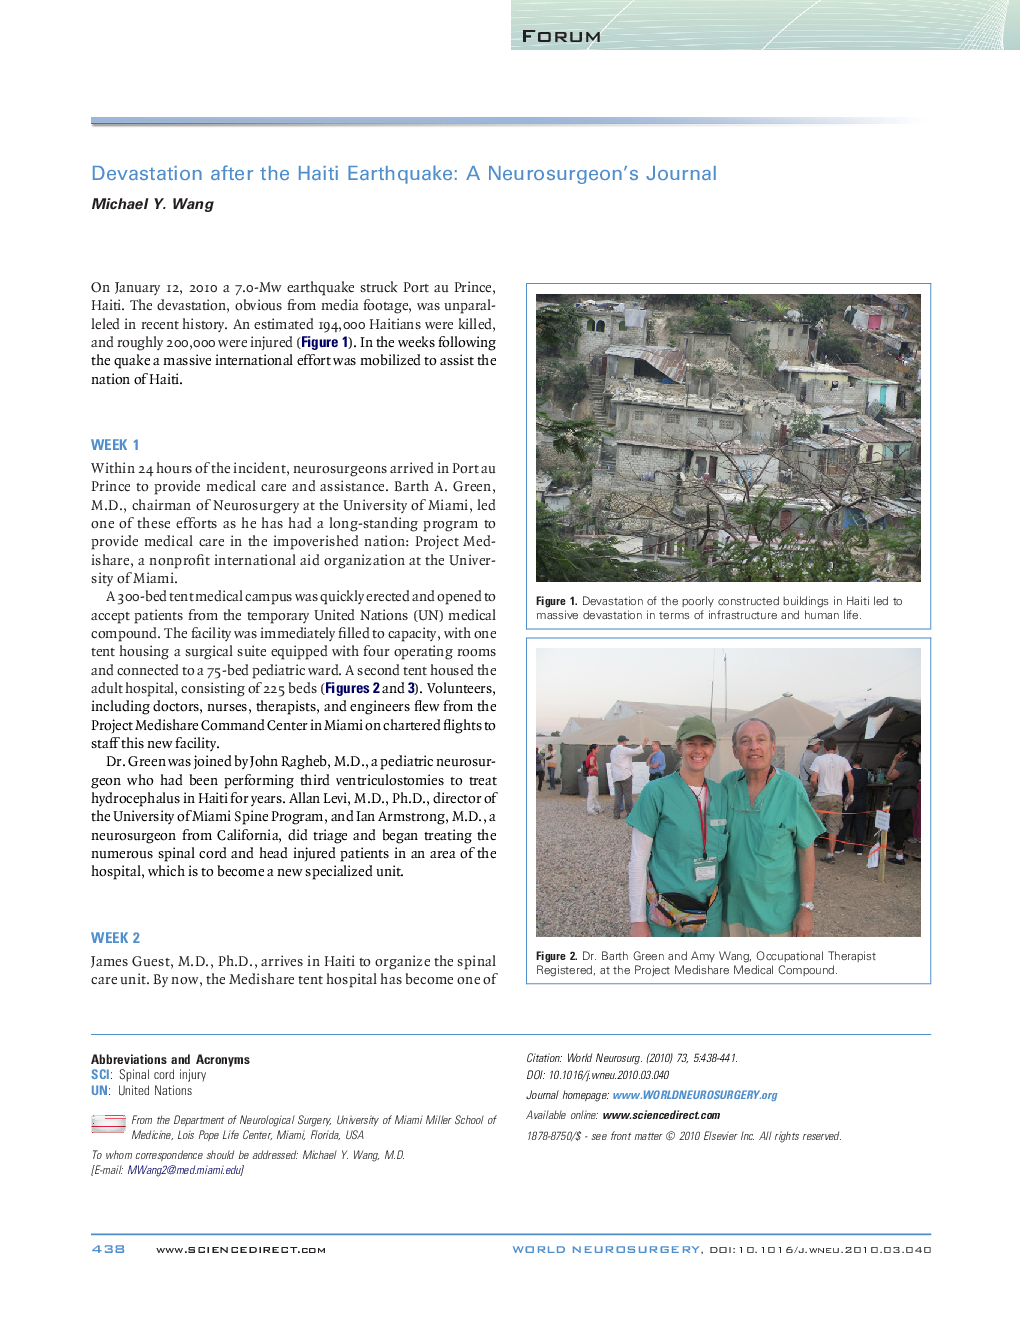 Devastation after the Haiti Earthquake: A Neurosurgeon's Journal